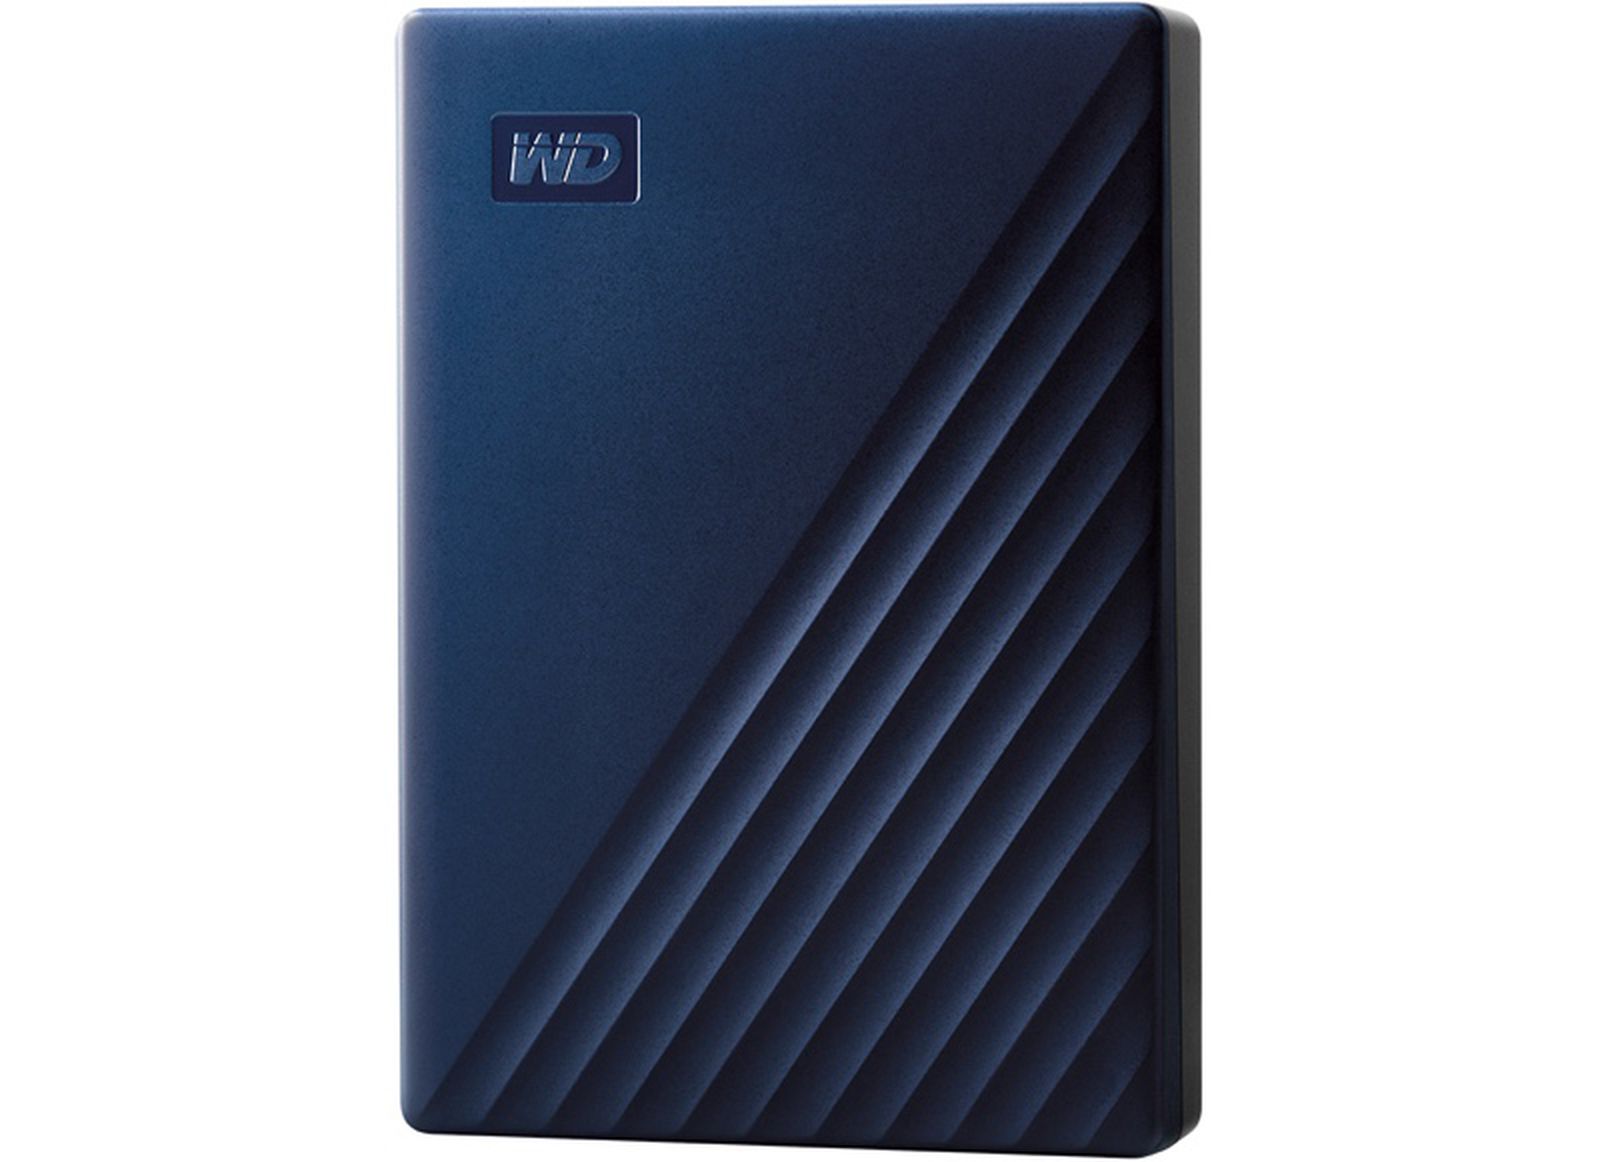 wd 1tb black my passport for mac portable external hard drive cnet